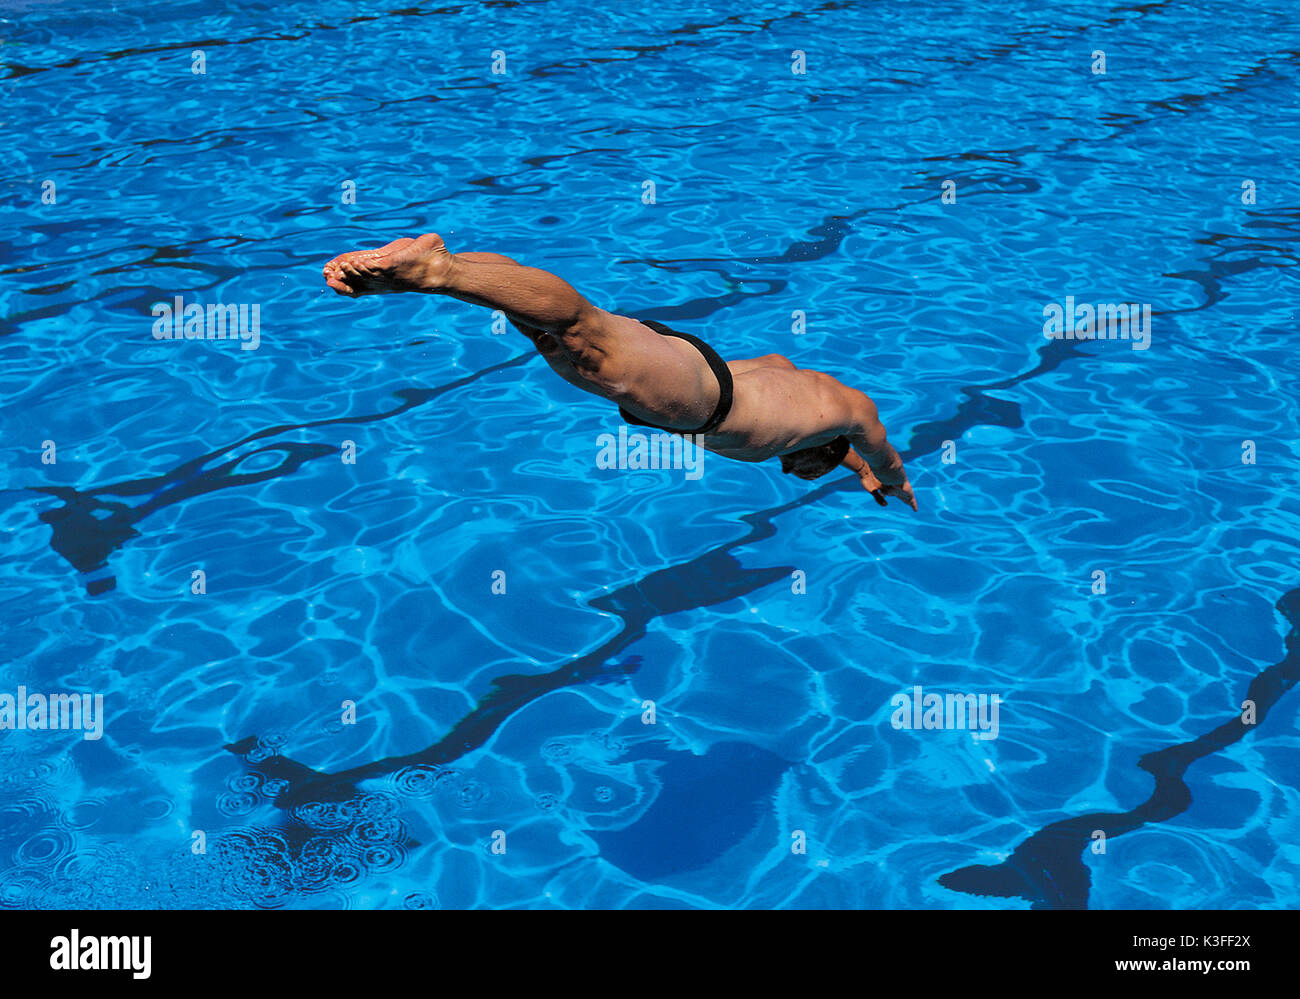 Man at the dive at the swimming pool Stock Photo